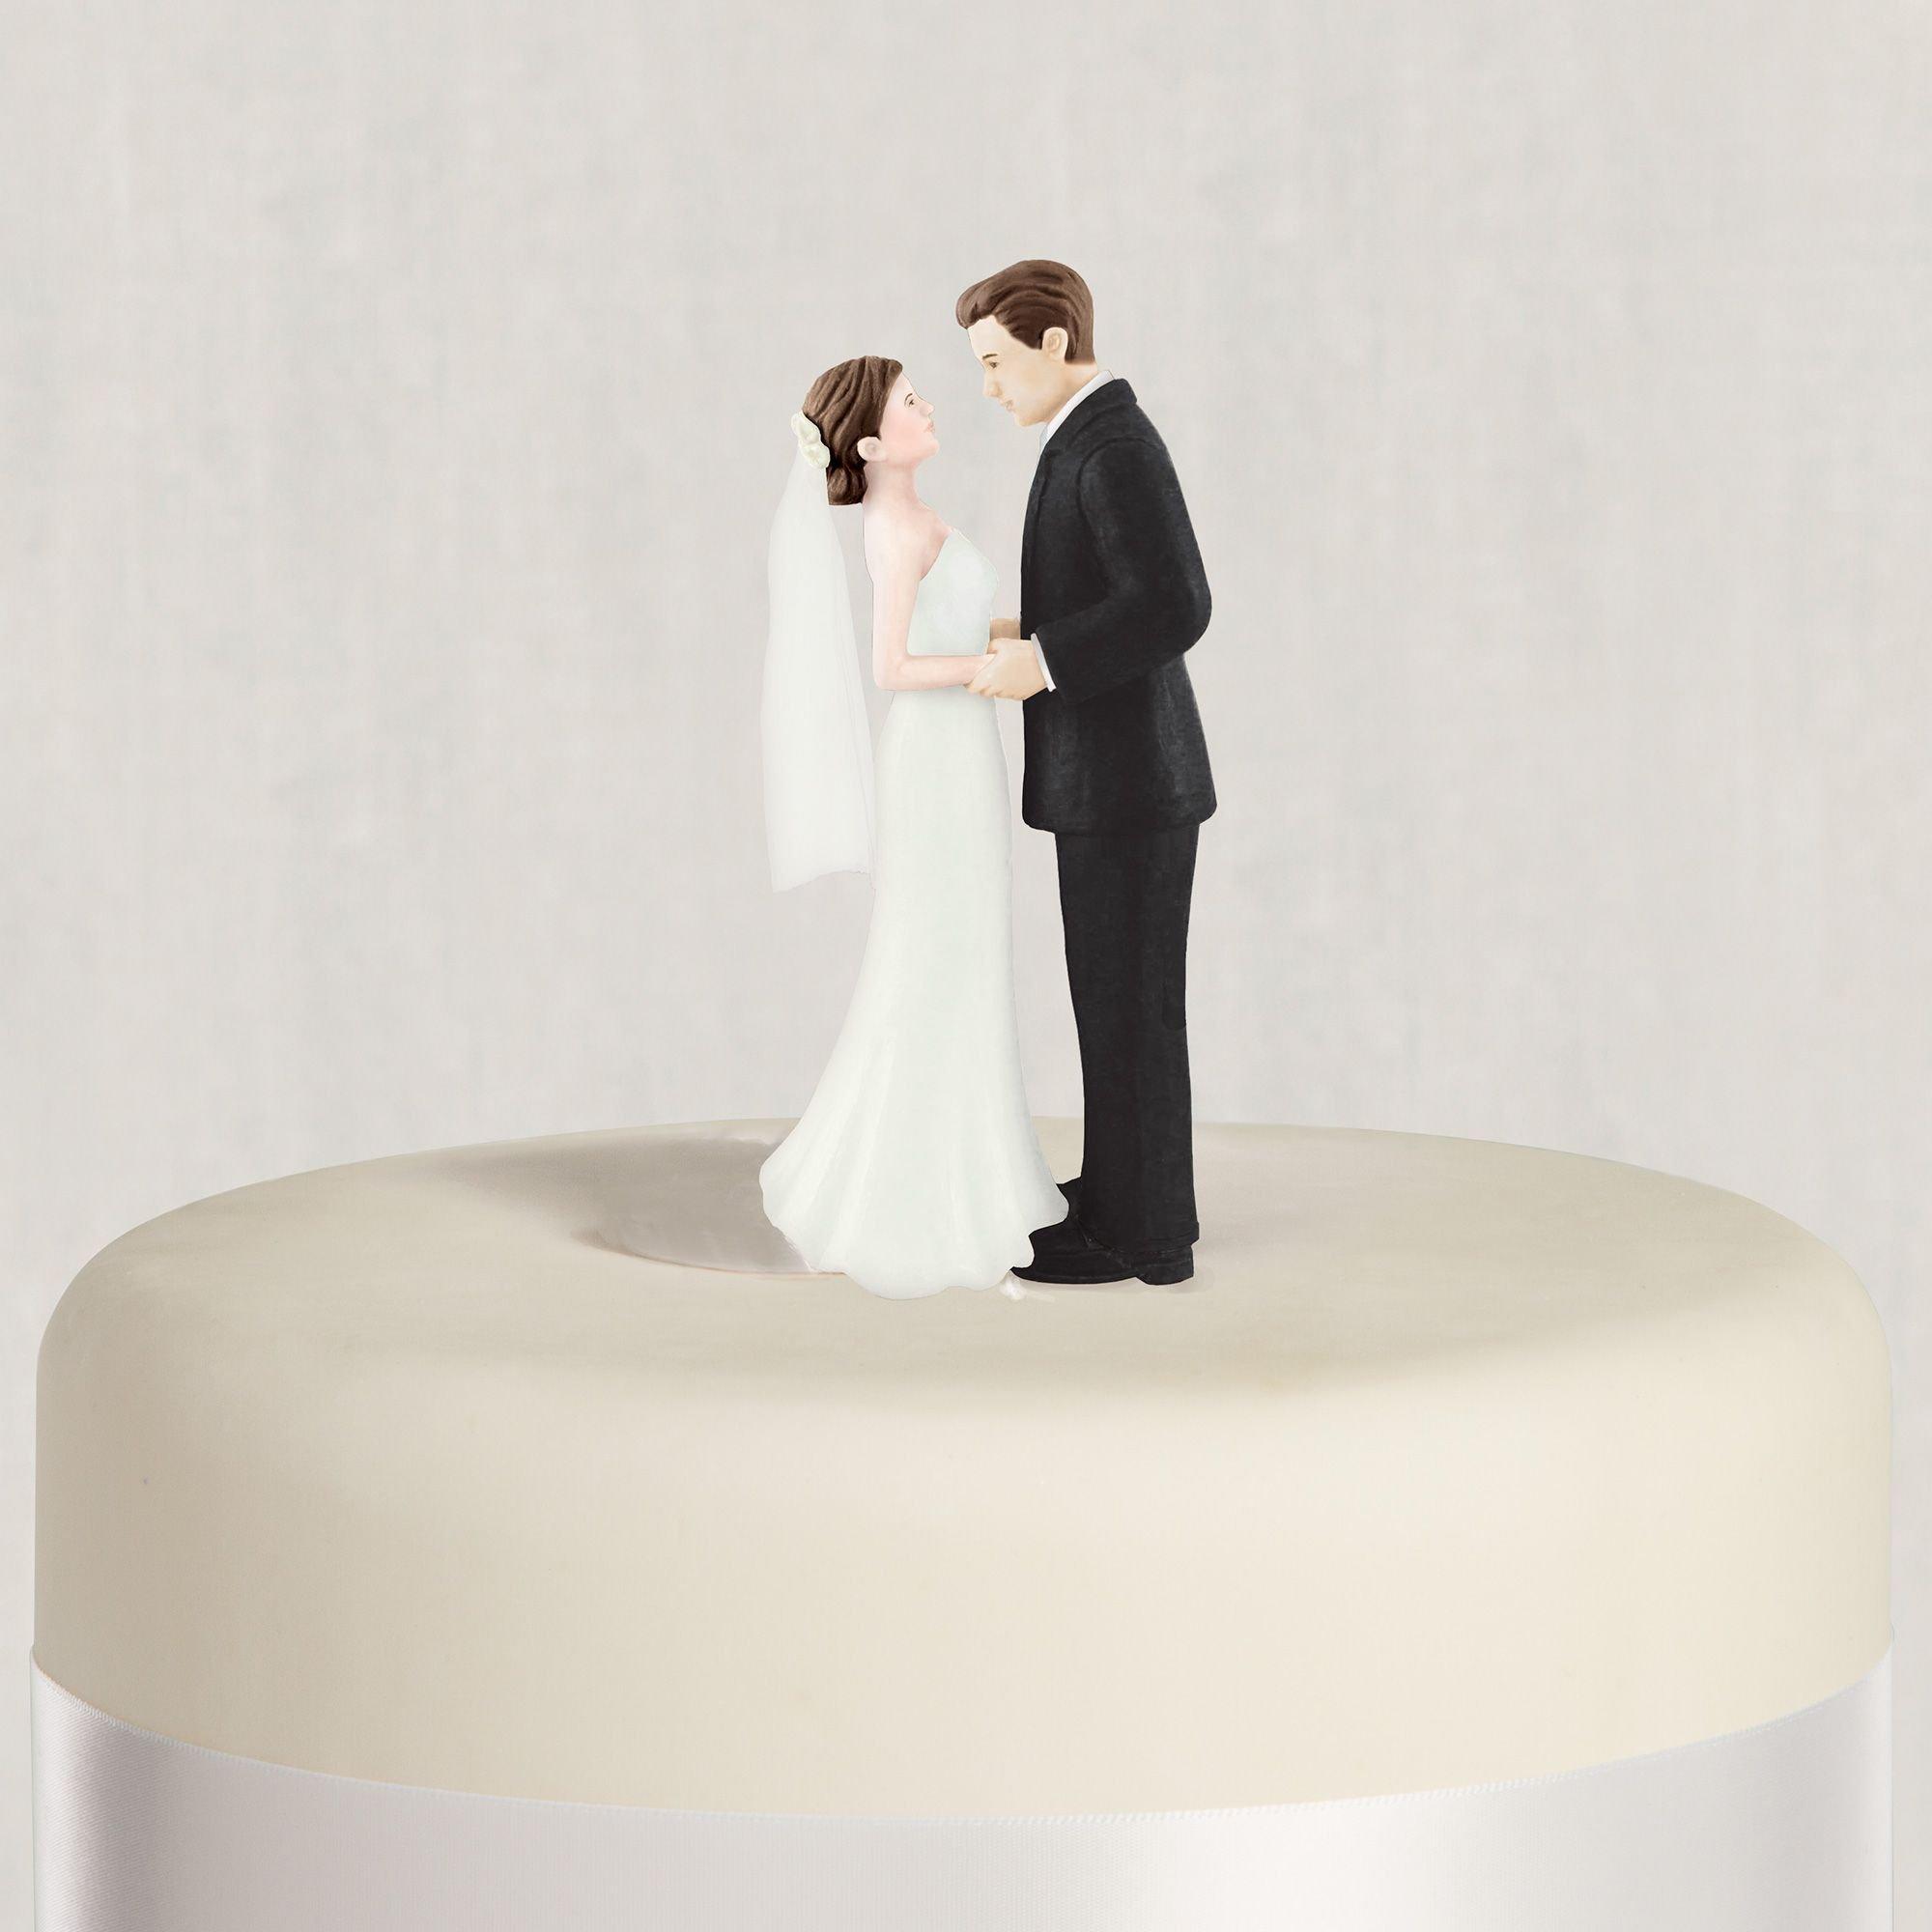 Brunette Bride & Groom Wedding Cake Topper | Party City